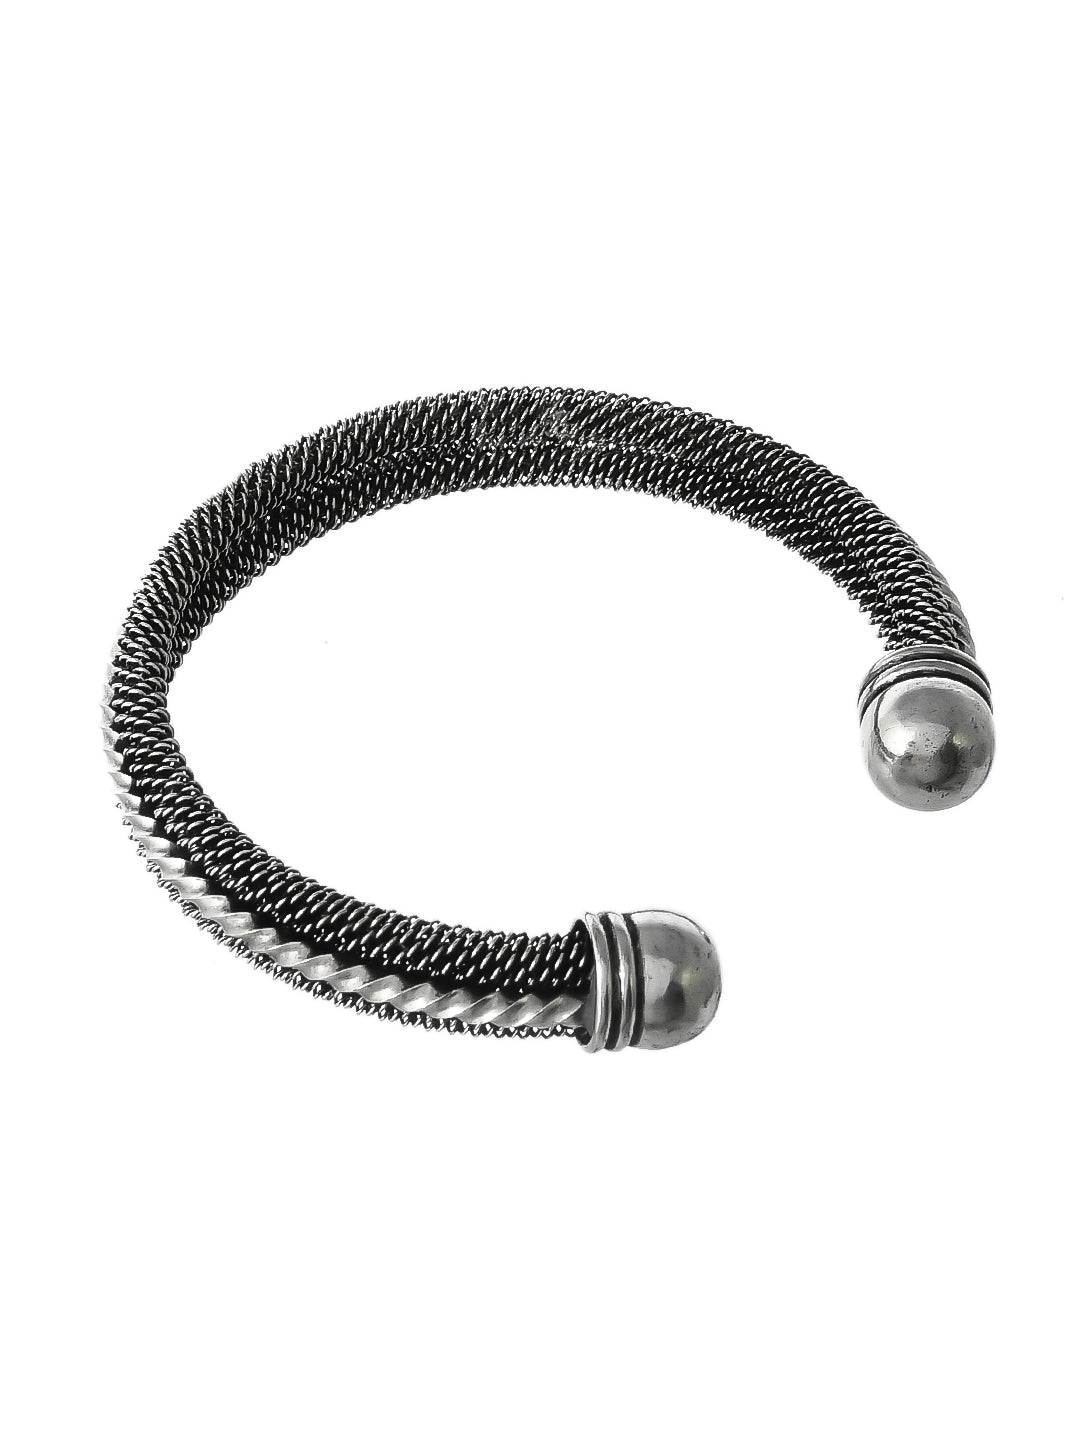 Womens Oxidised Silver Plated Stylish Adjustable Bracelets